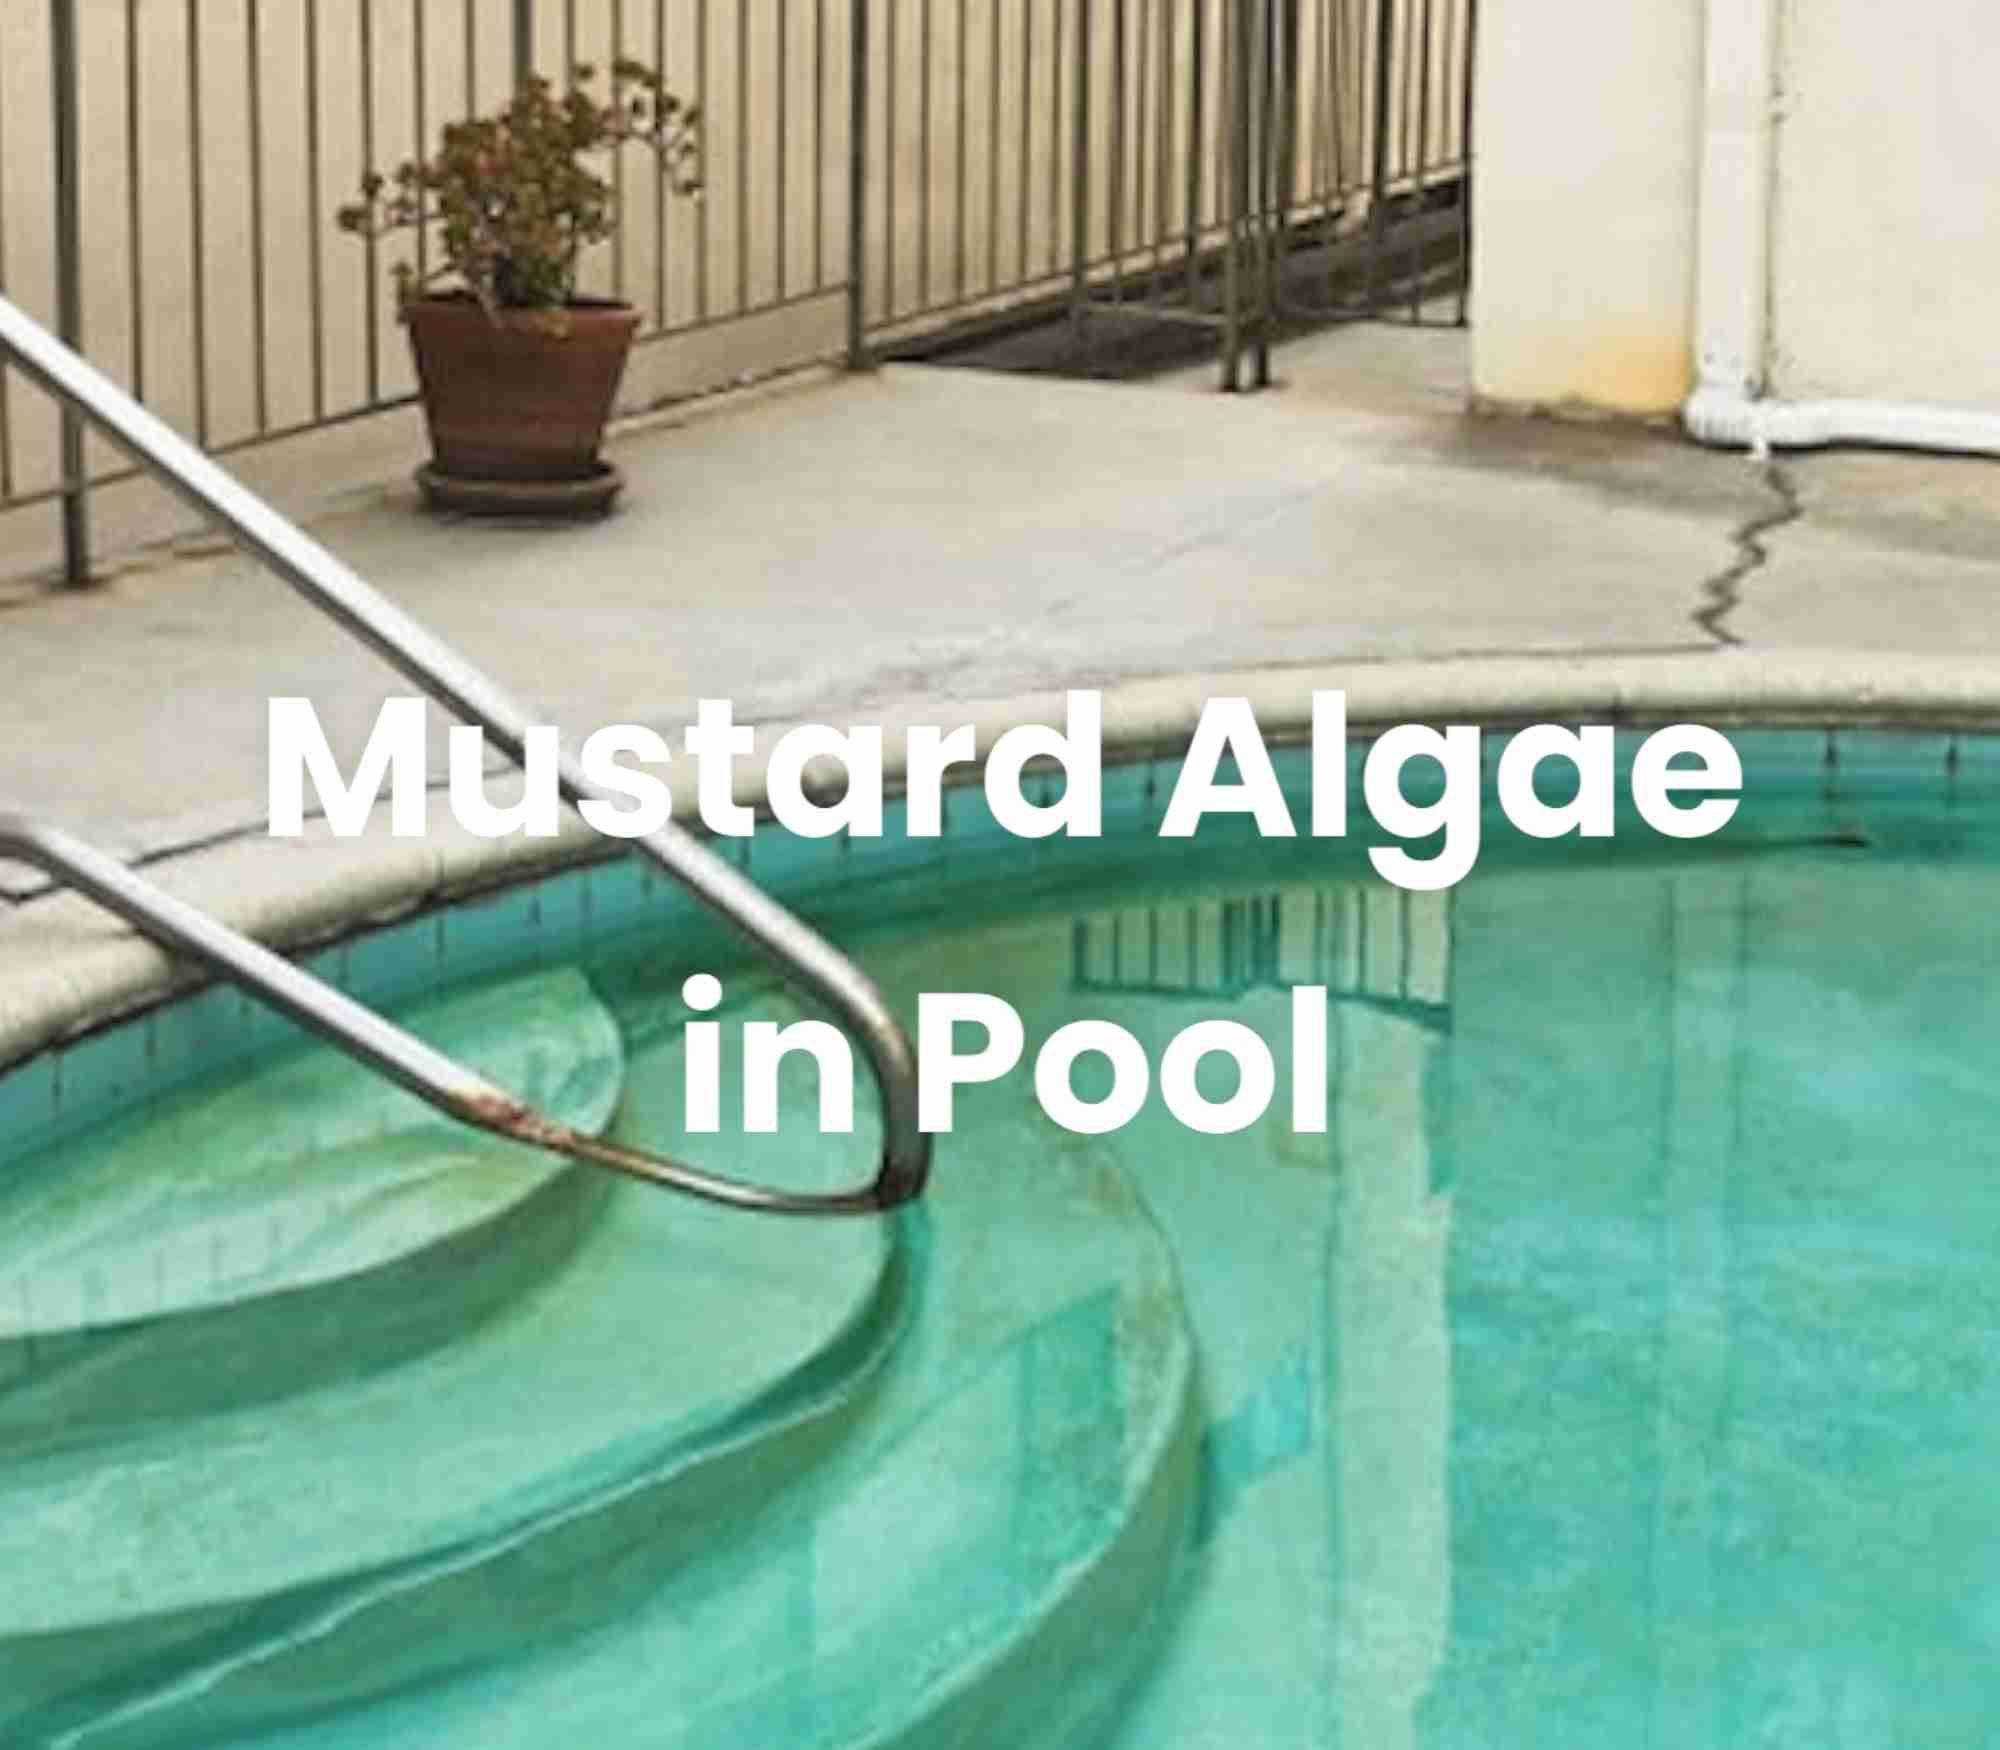 Mustard Algae in Pool